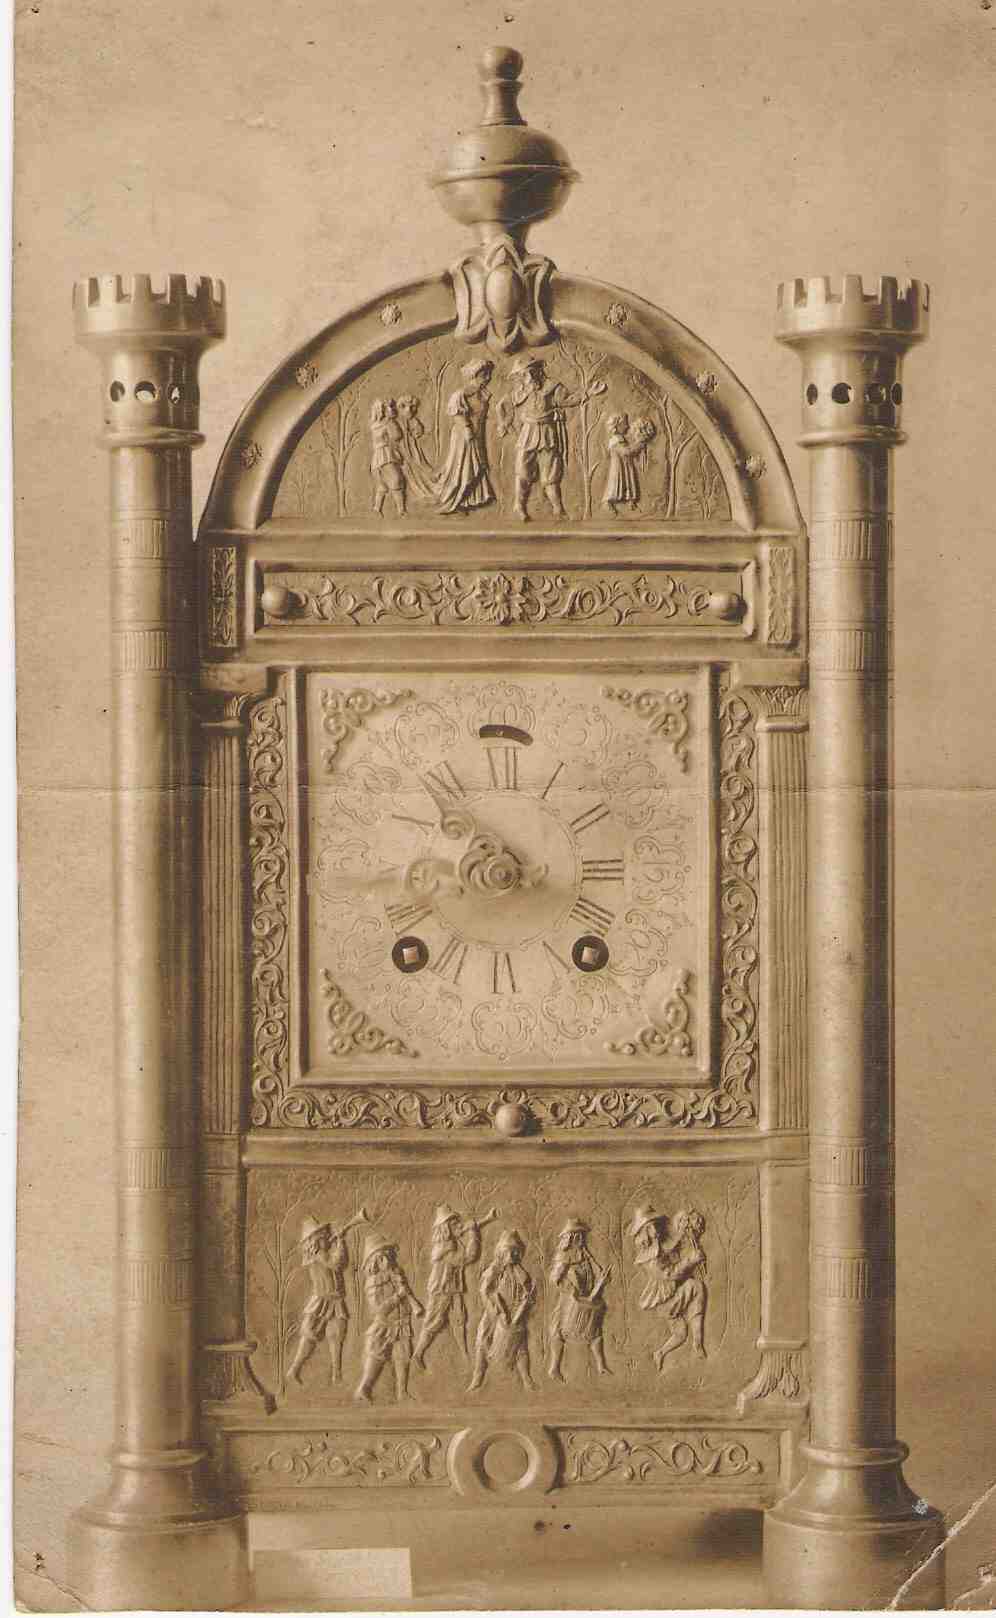 Hand hammered clock